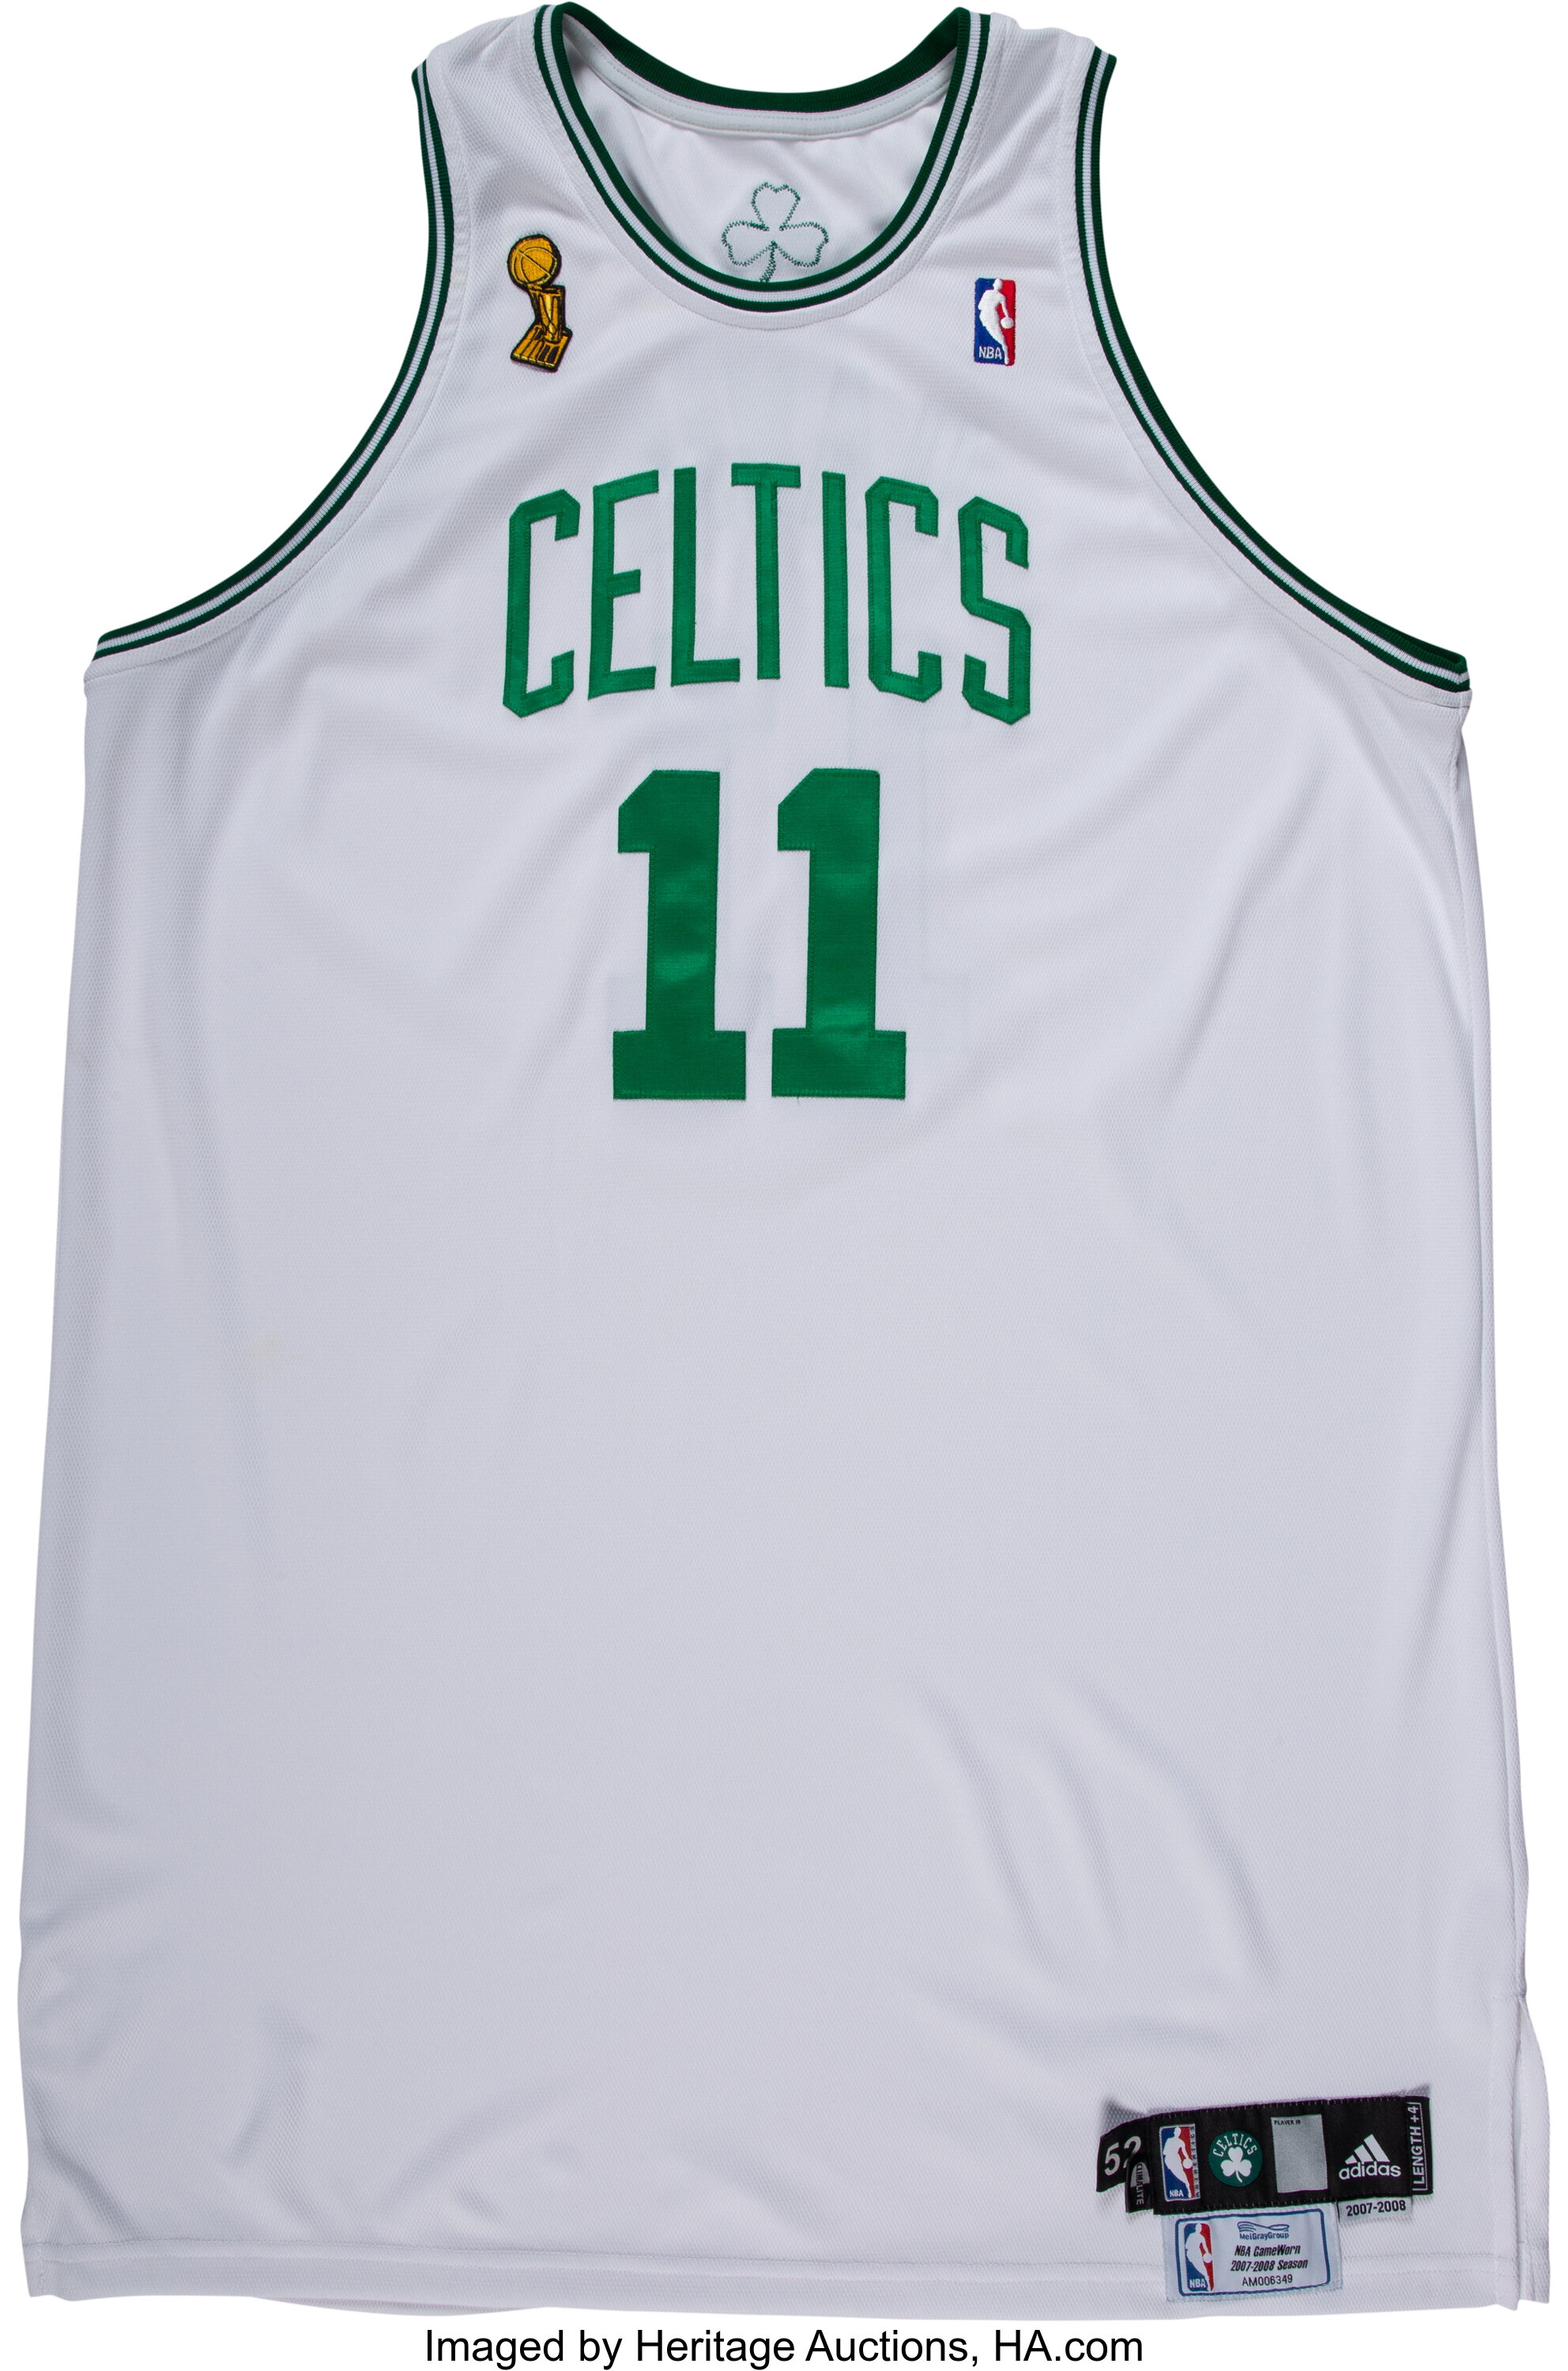 2008 Boston Celtics NBA Championship Shirt